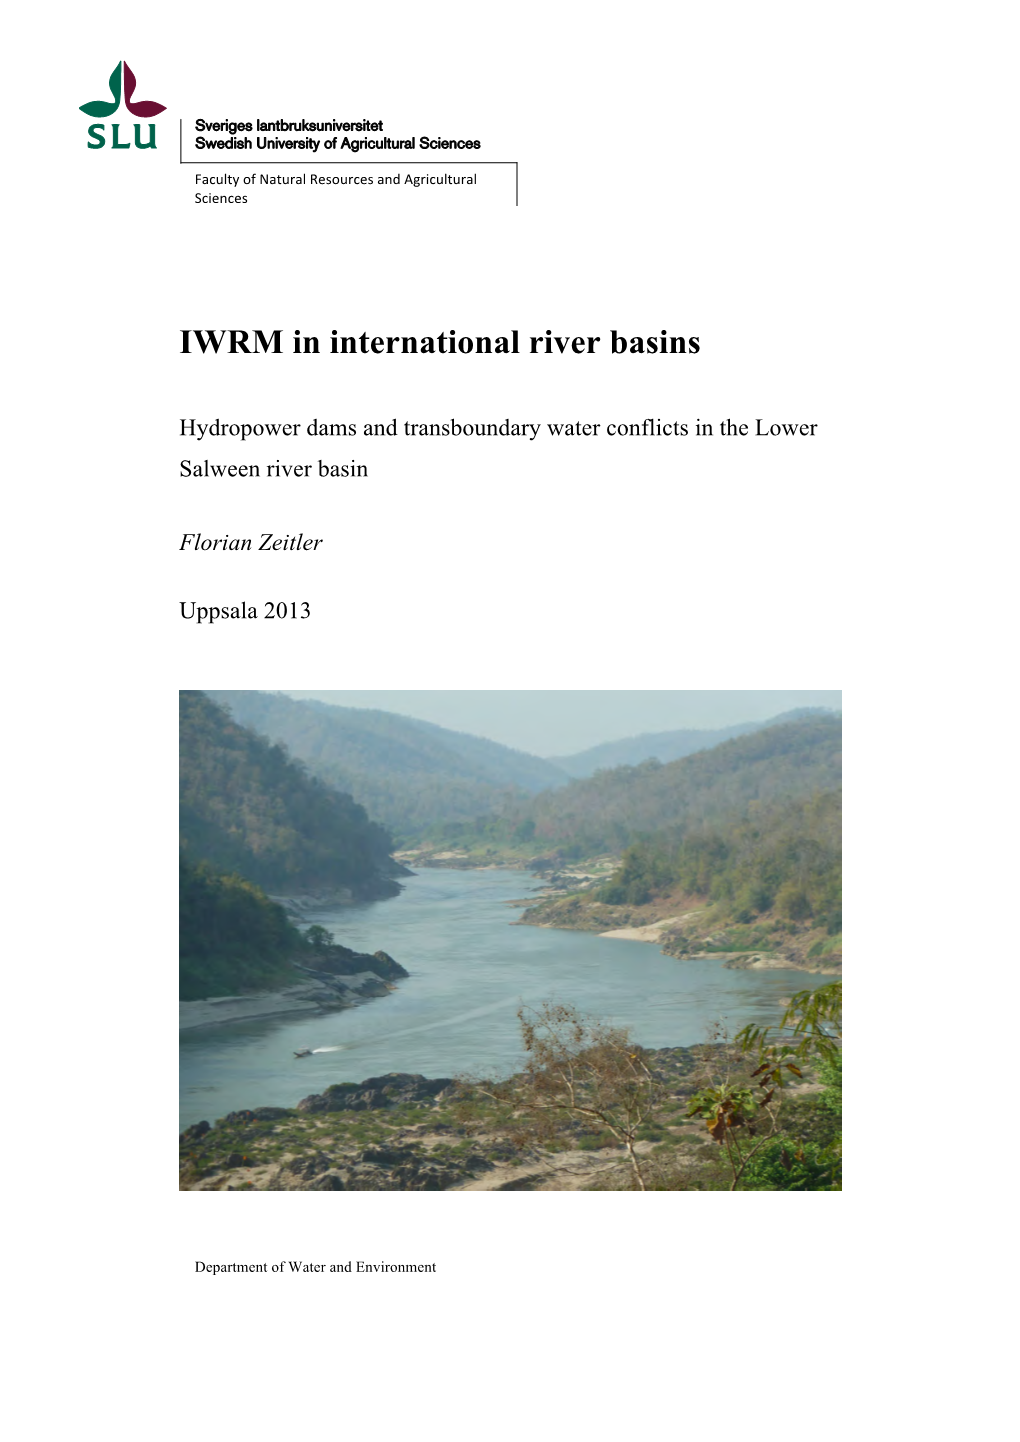 IWRM in International River Basins